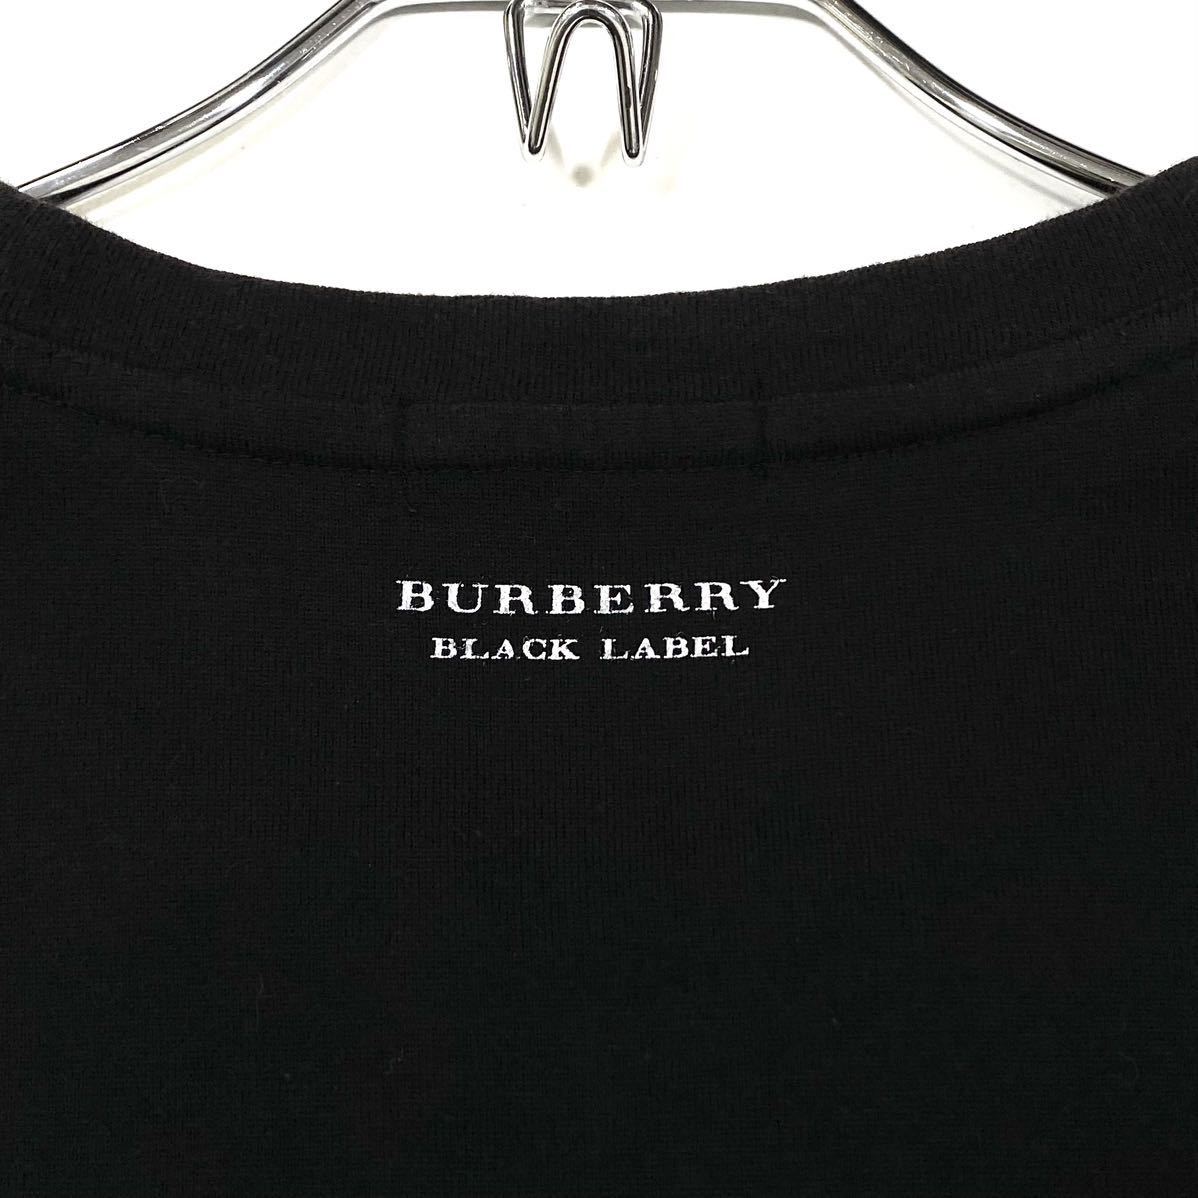 BURBERRY BLACK LABEL(バーバリーブラックレーベル)半袖Tシャツ ノバチェック 刺繍ロゴ メンズ2 ベージュ系/ブラック/他_画像5